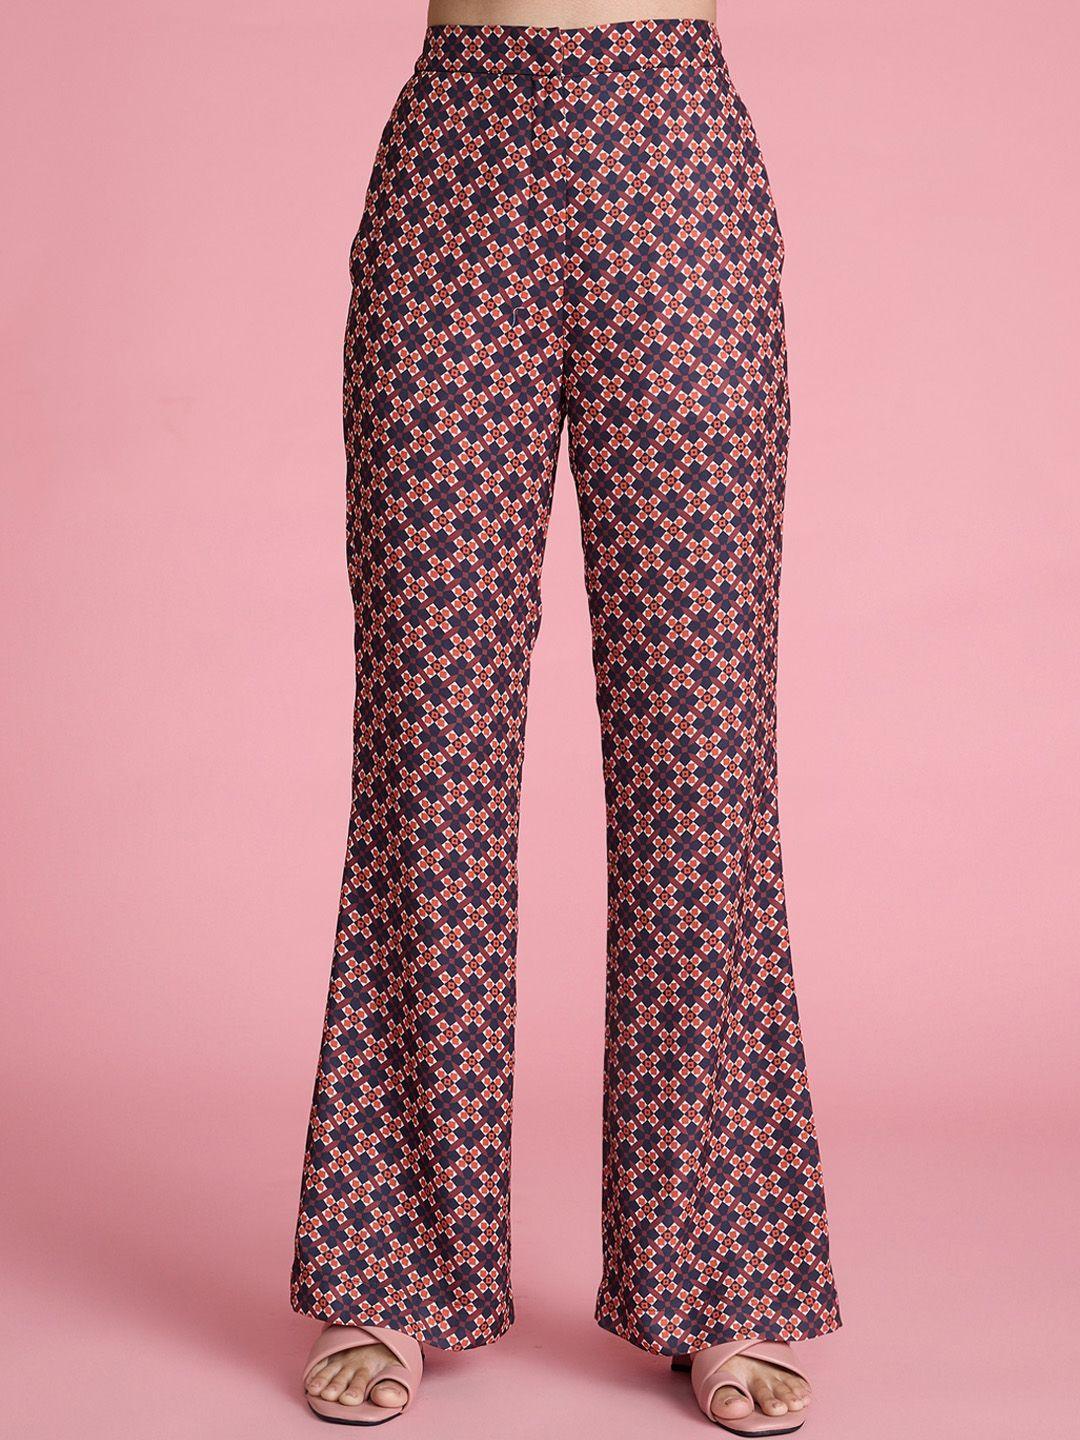 20dresses women black & maroon geometric printed high-rise flared bootcut trousers